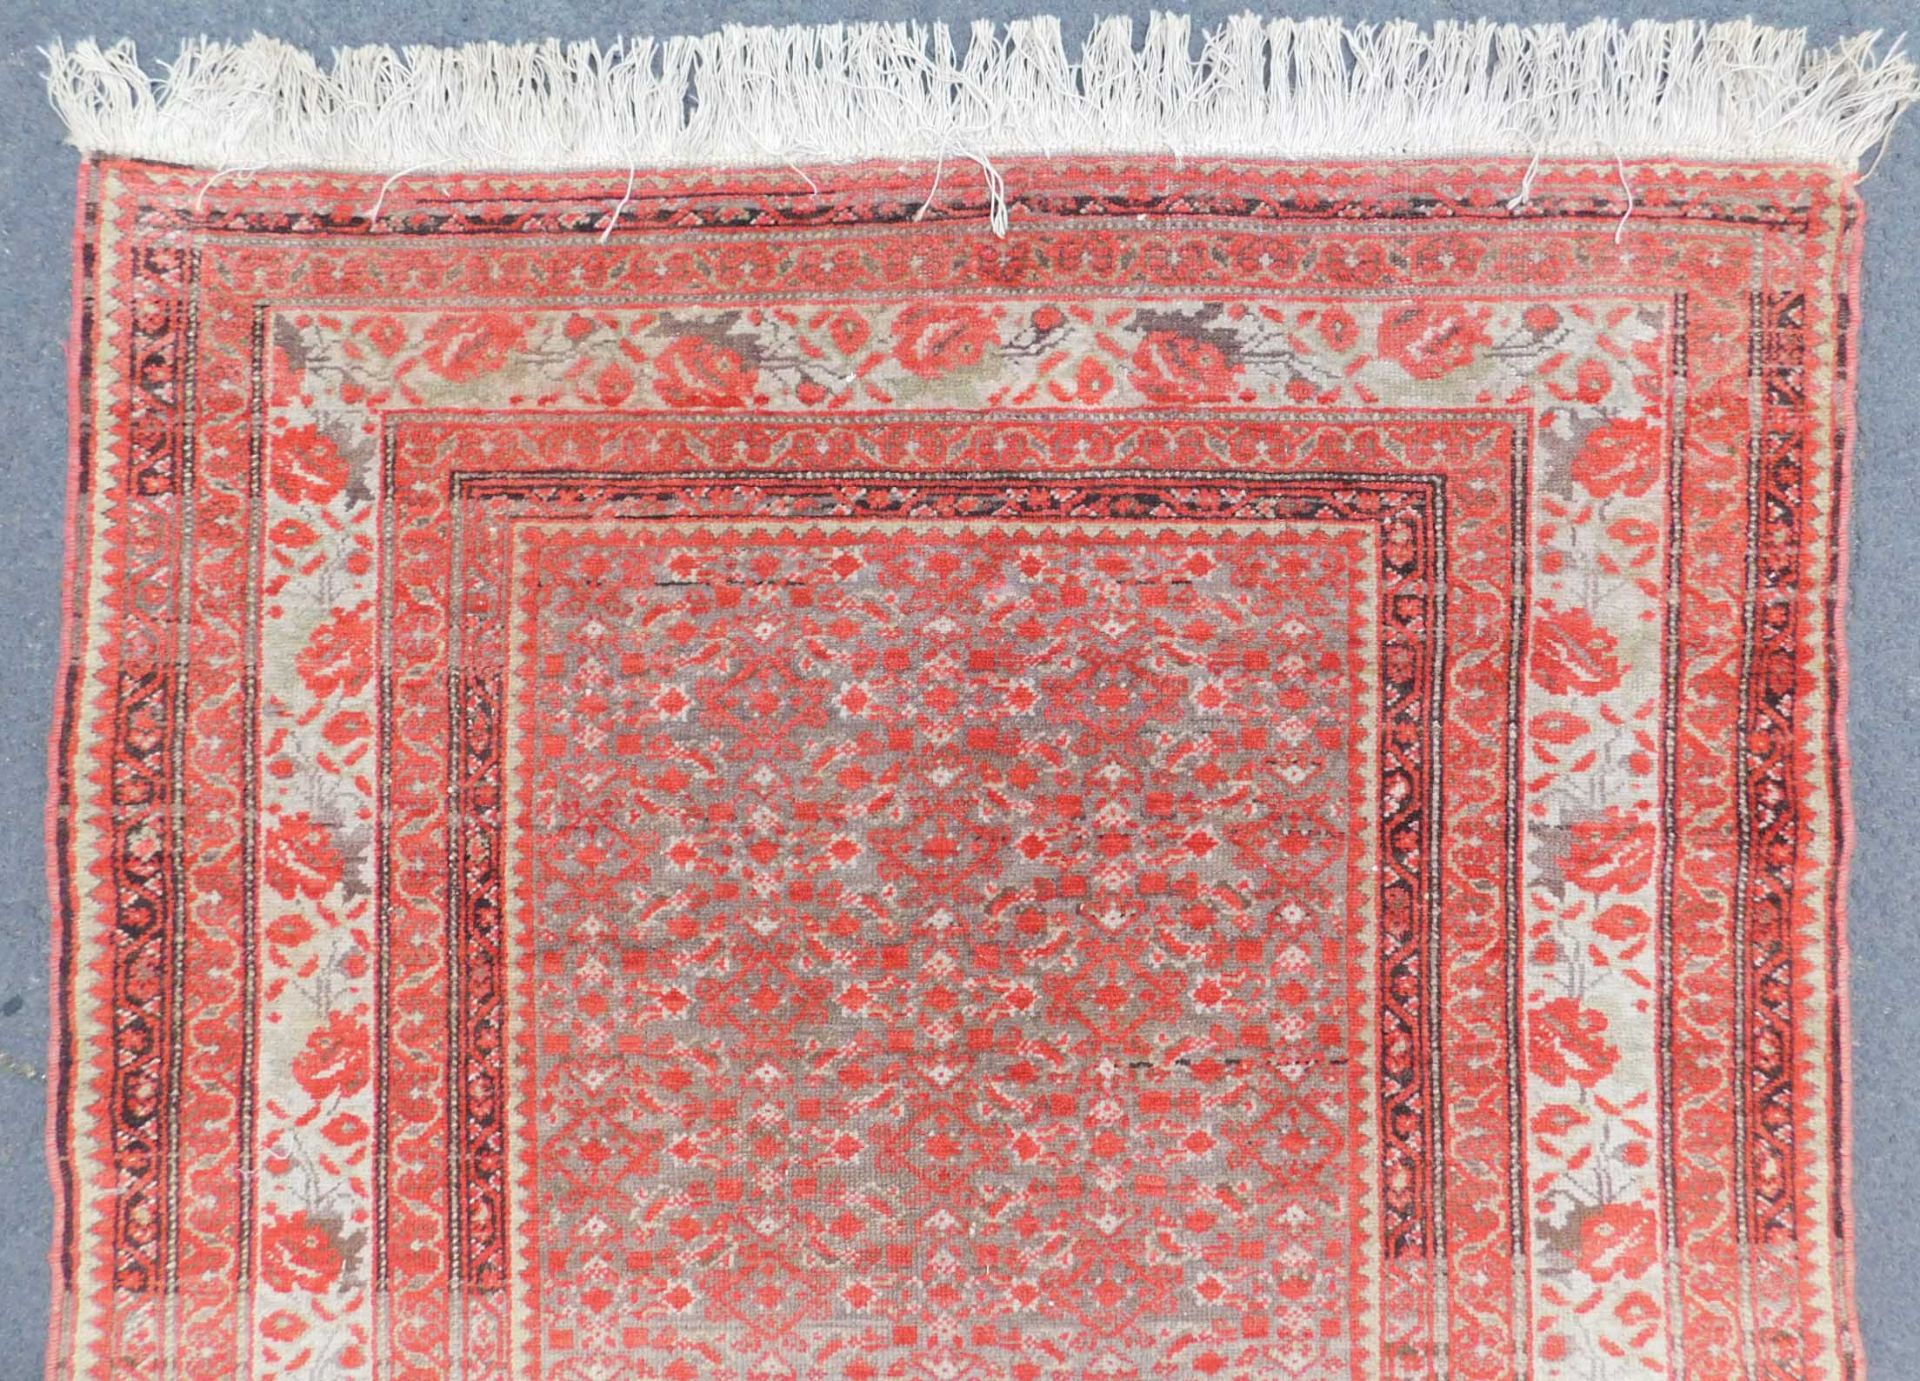 Malayer Persian carpet. Iran. Antique, around 100 - 150 years old. - Image 4 of 6